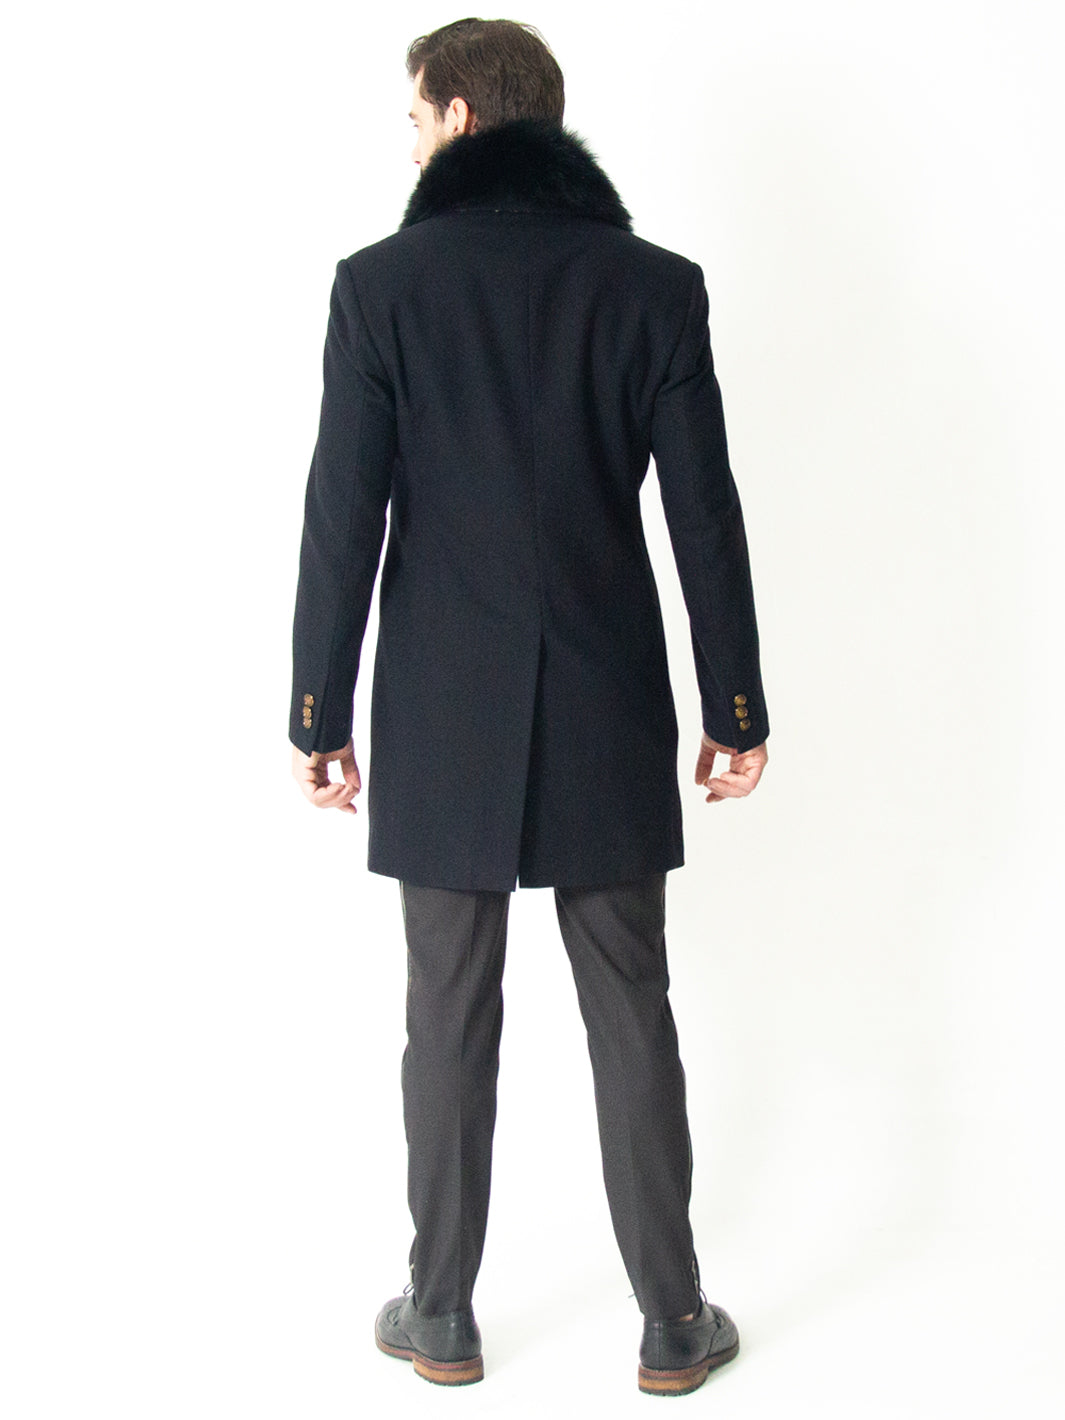 Black Cashmere Coat with Fur